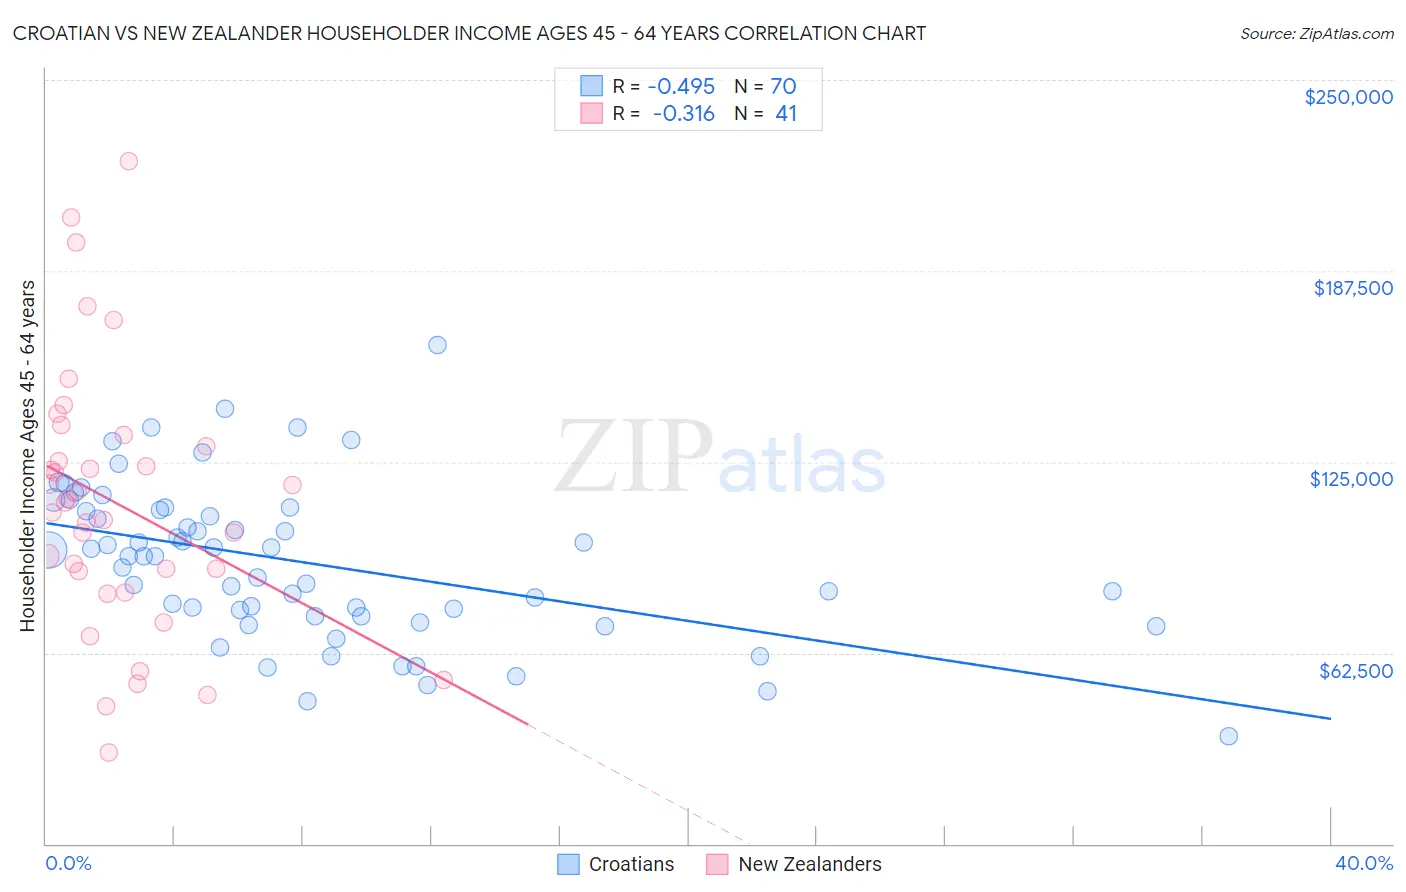 Croatian vs New Zealander Householder Income Ages 45 - 64 years